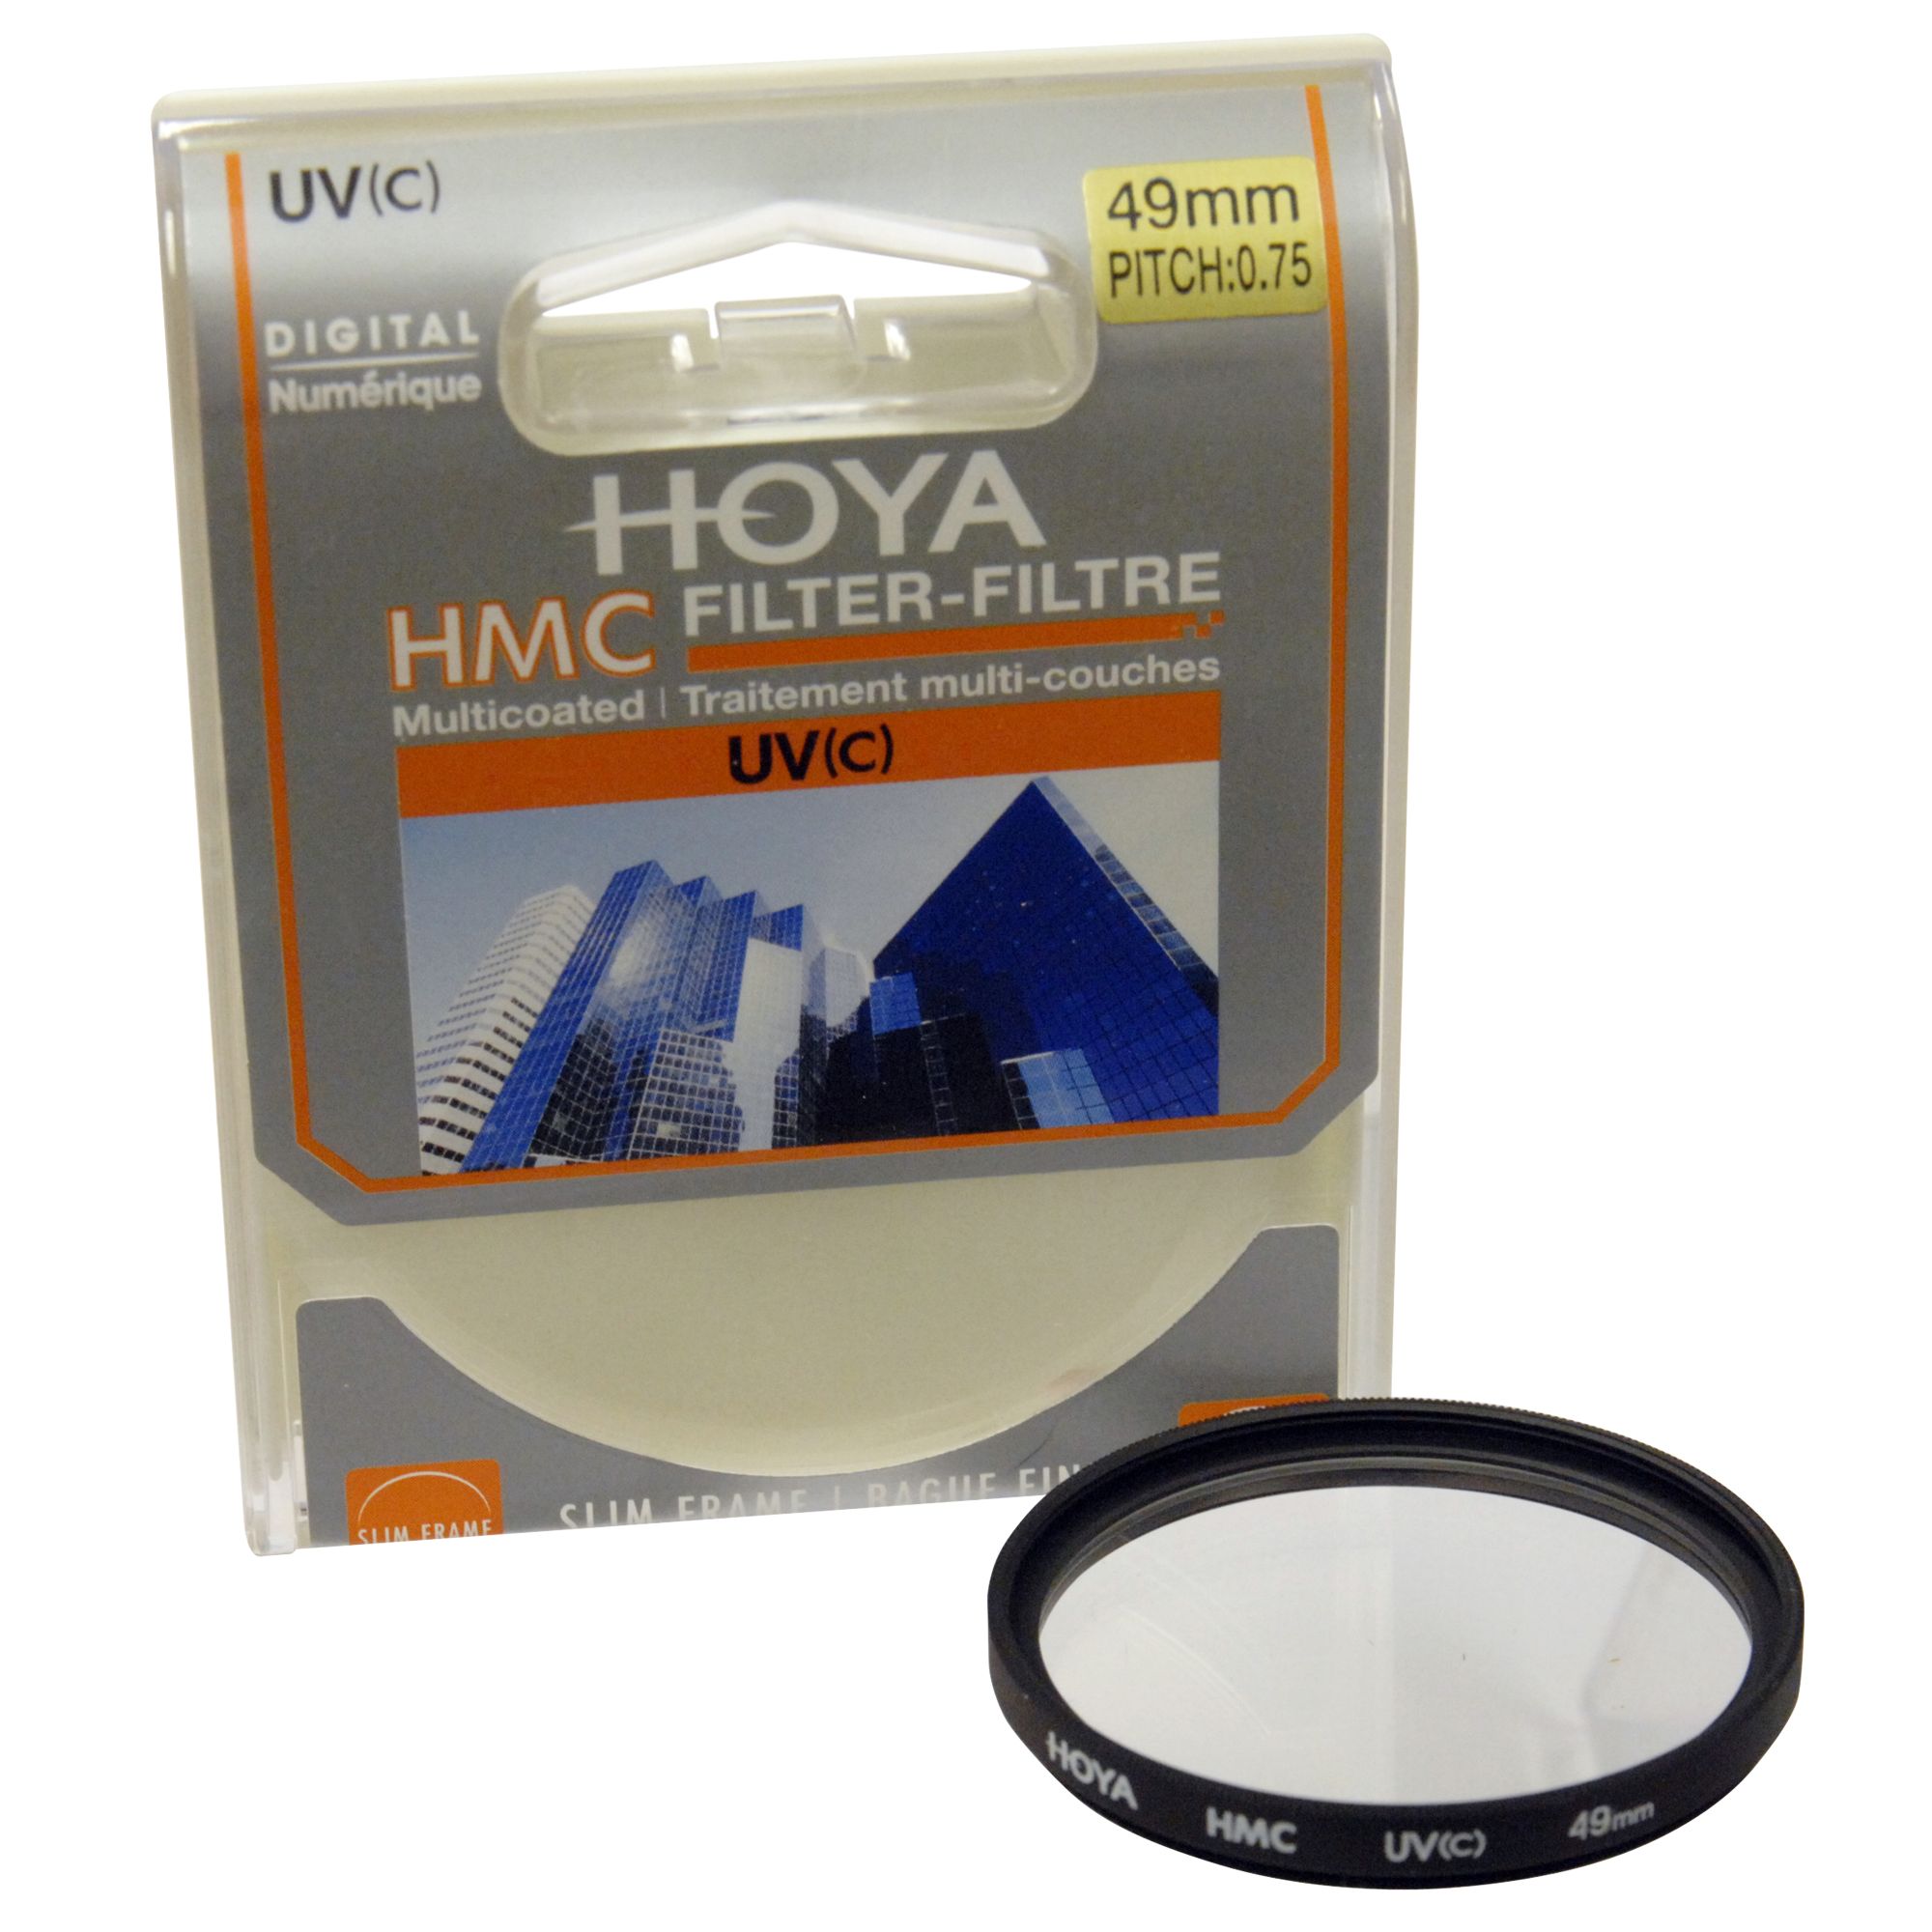 Hoya Uv Lens Filter 49mm At John Lewis And Partners